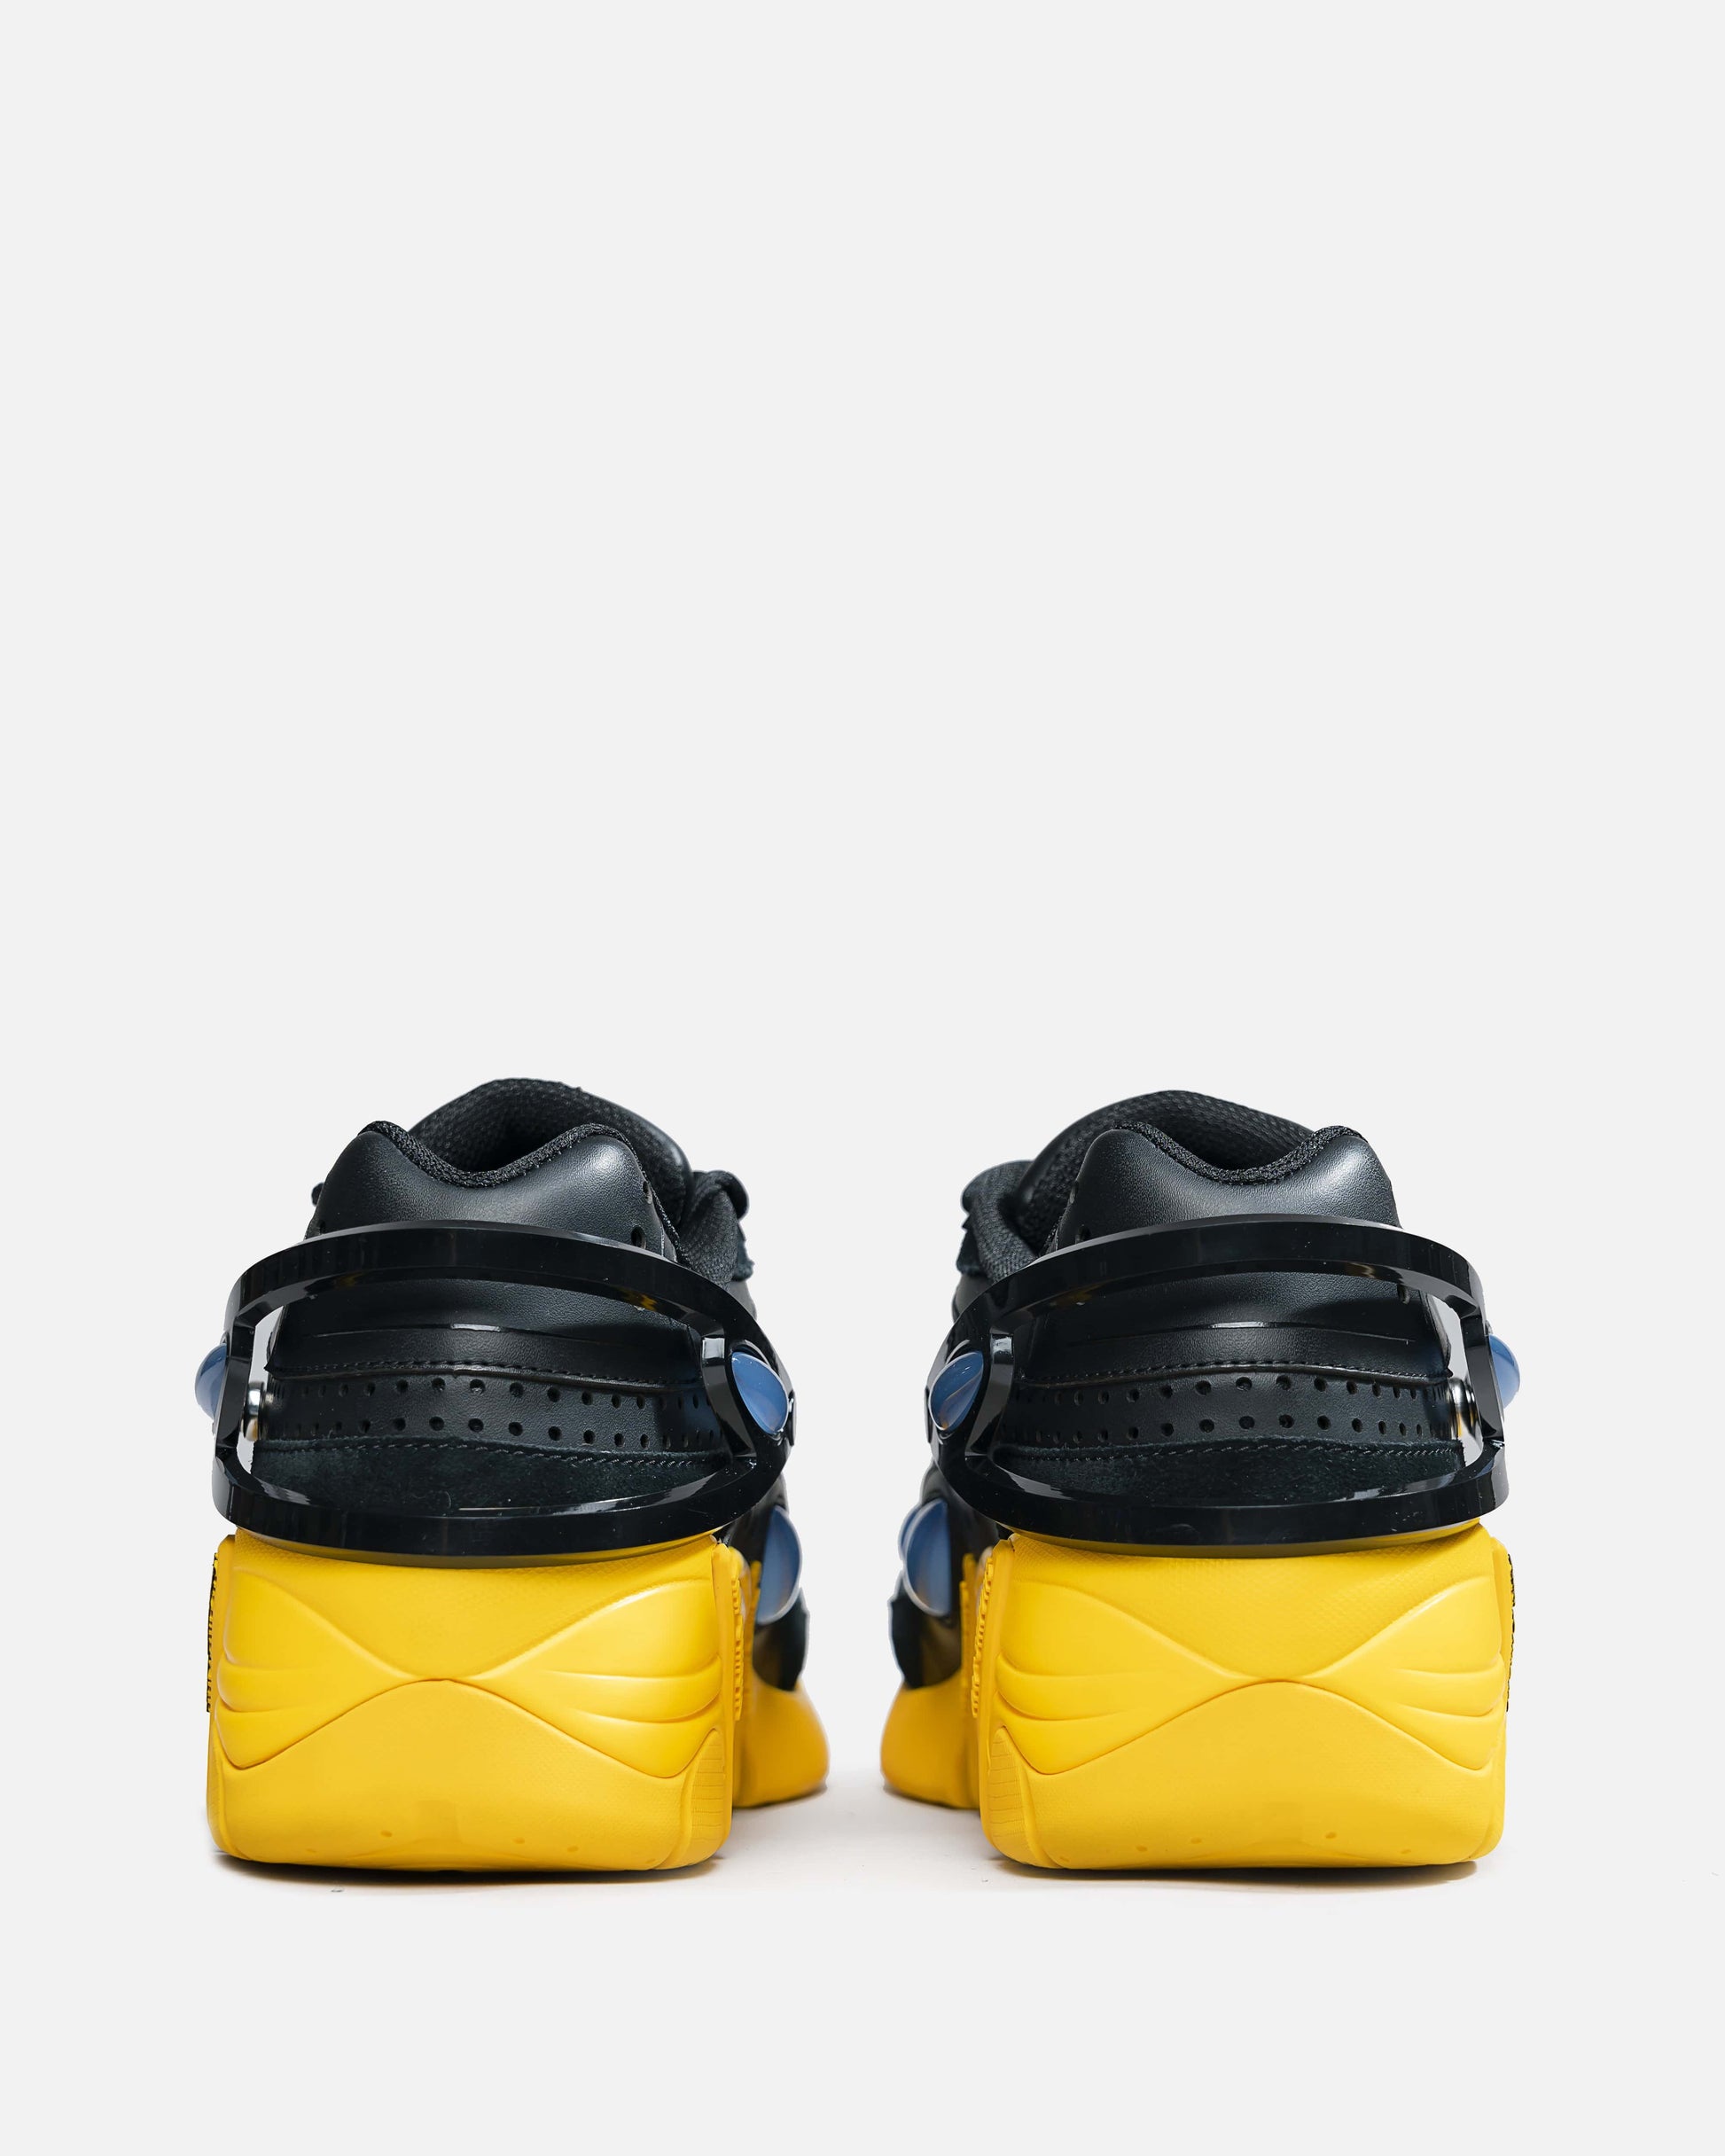 Raf Simons Men's Sneakers Cylon 21 in Black & Yellow